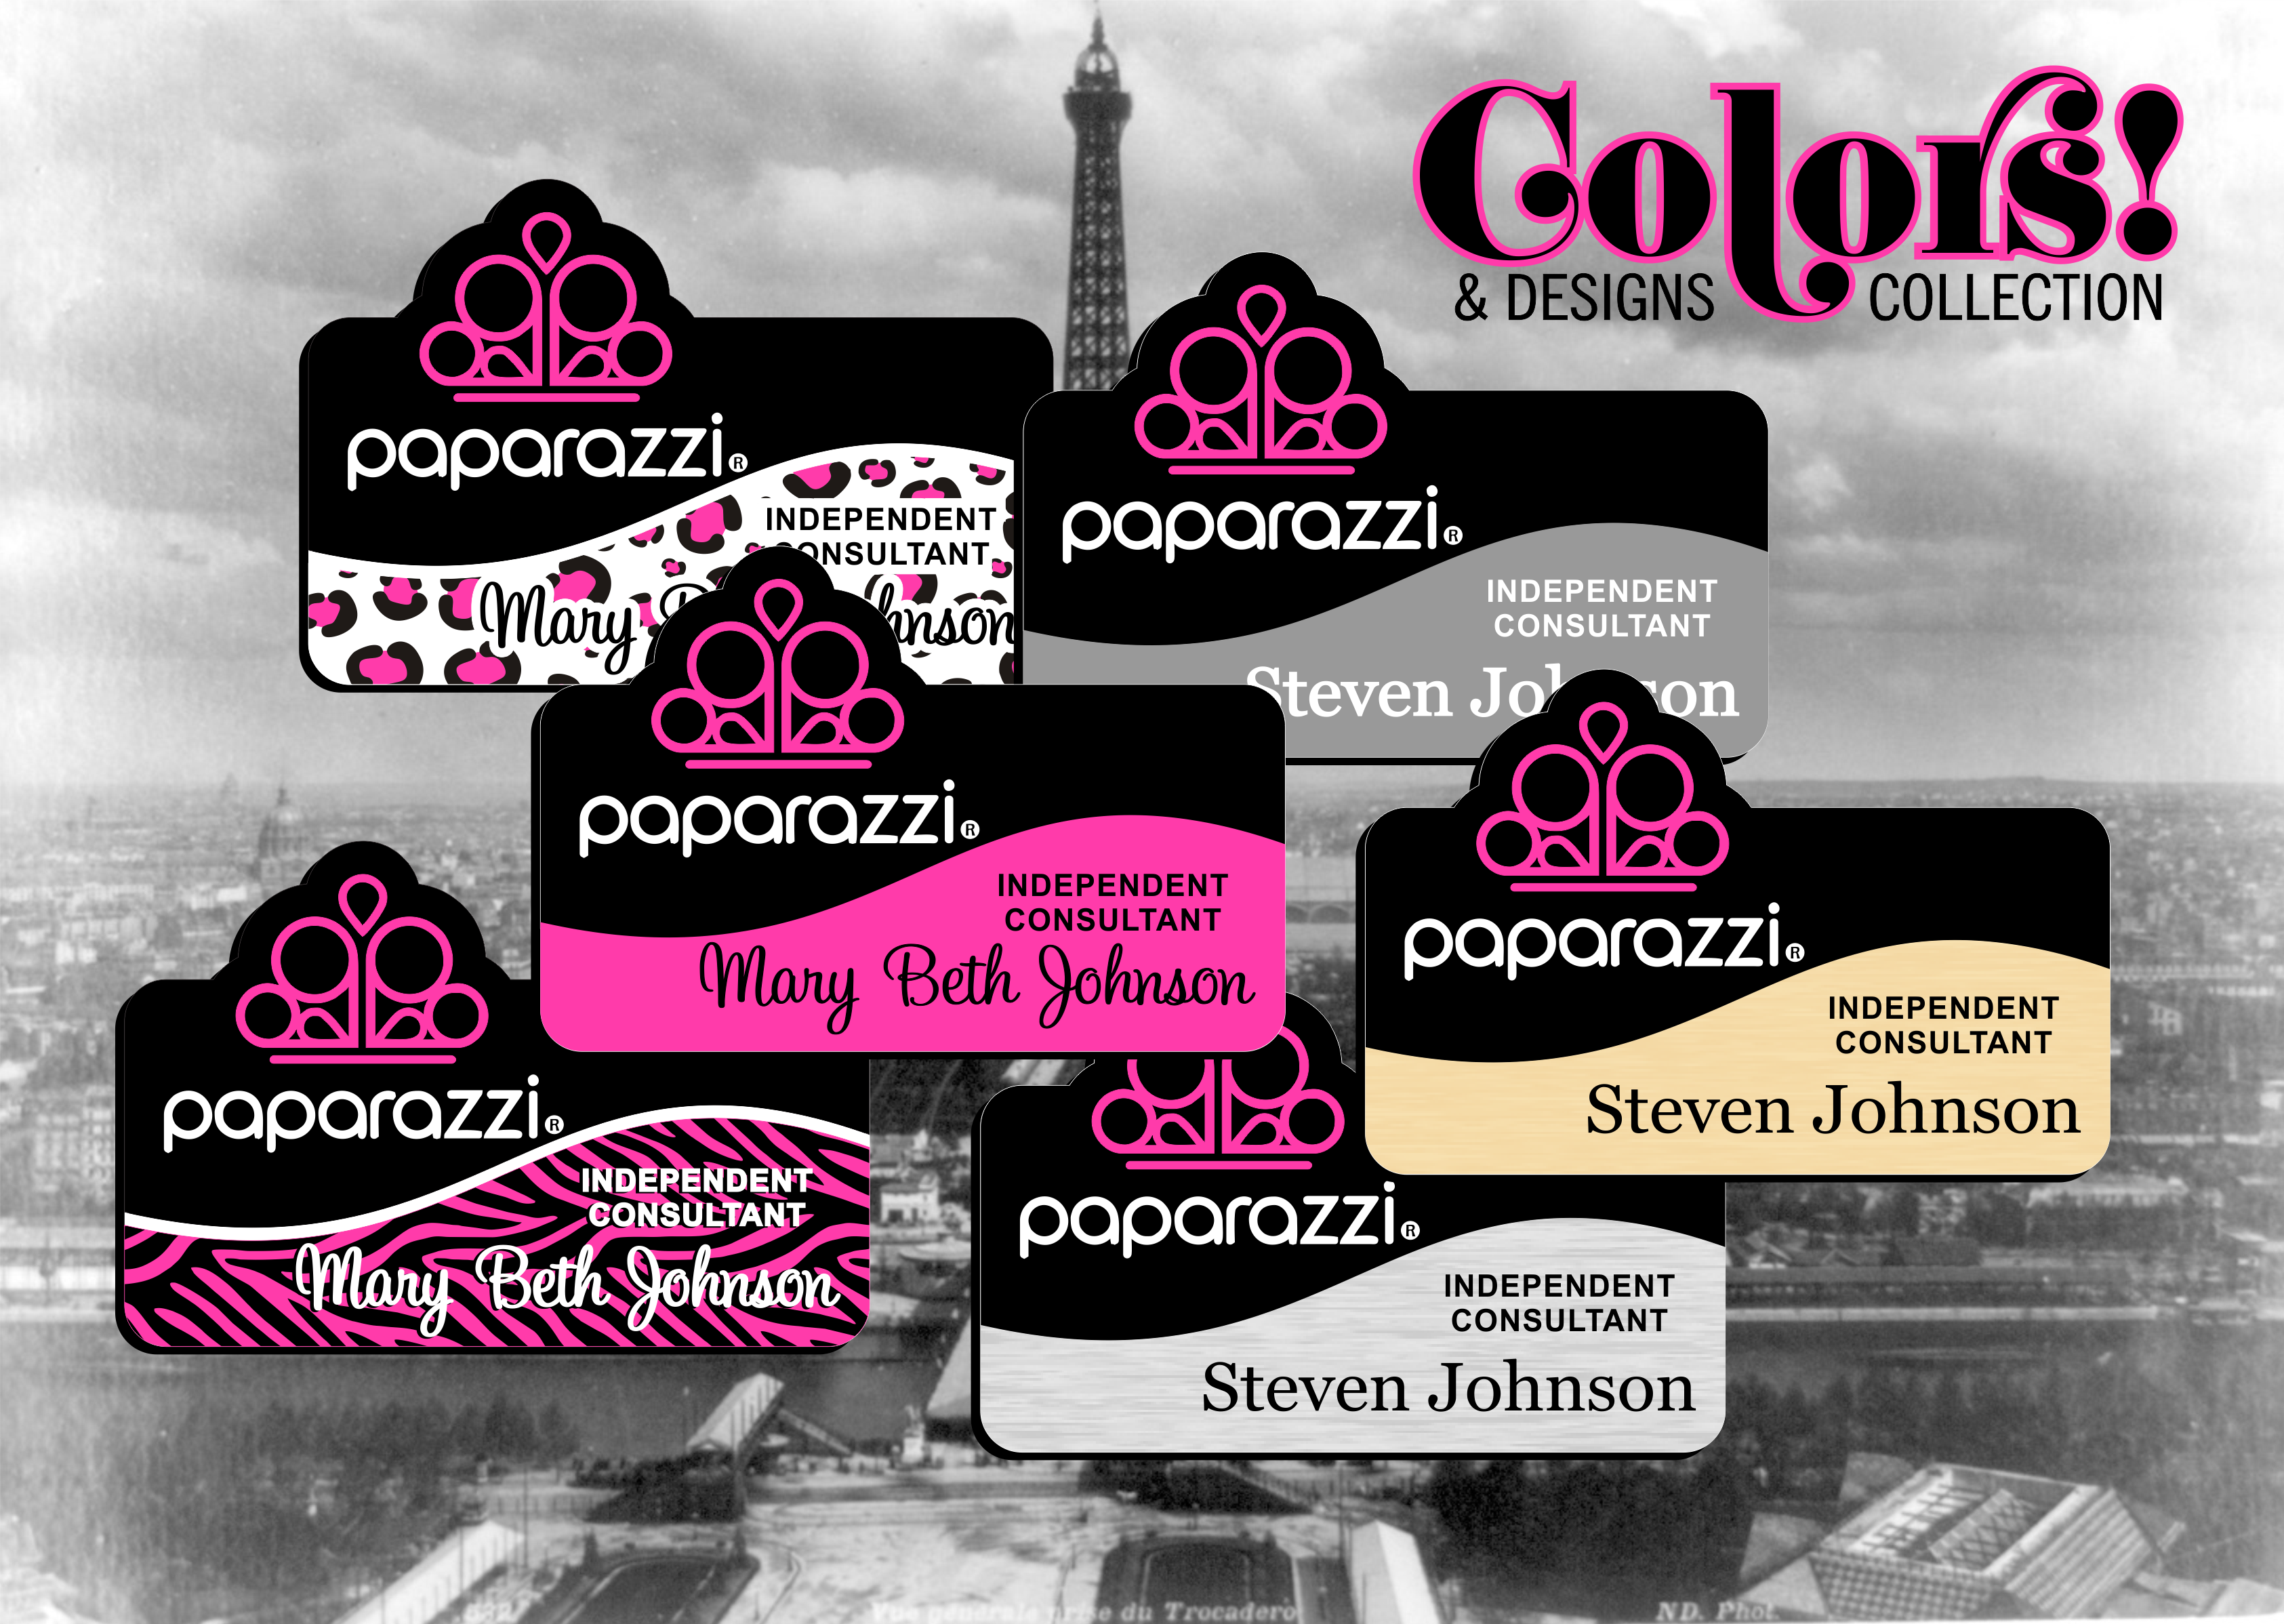 Paparazzi Name Badges - Colors & Designs Collection